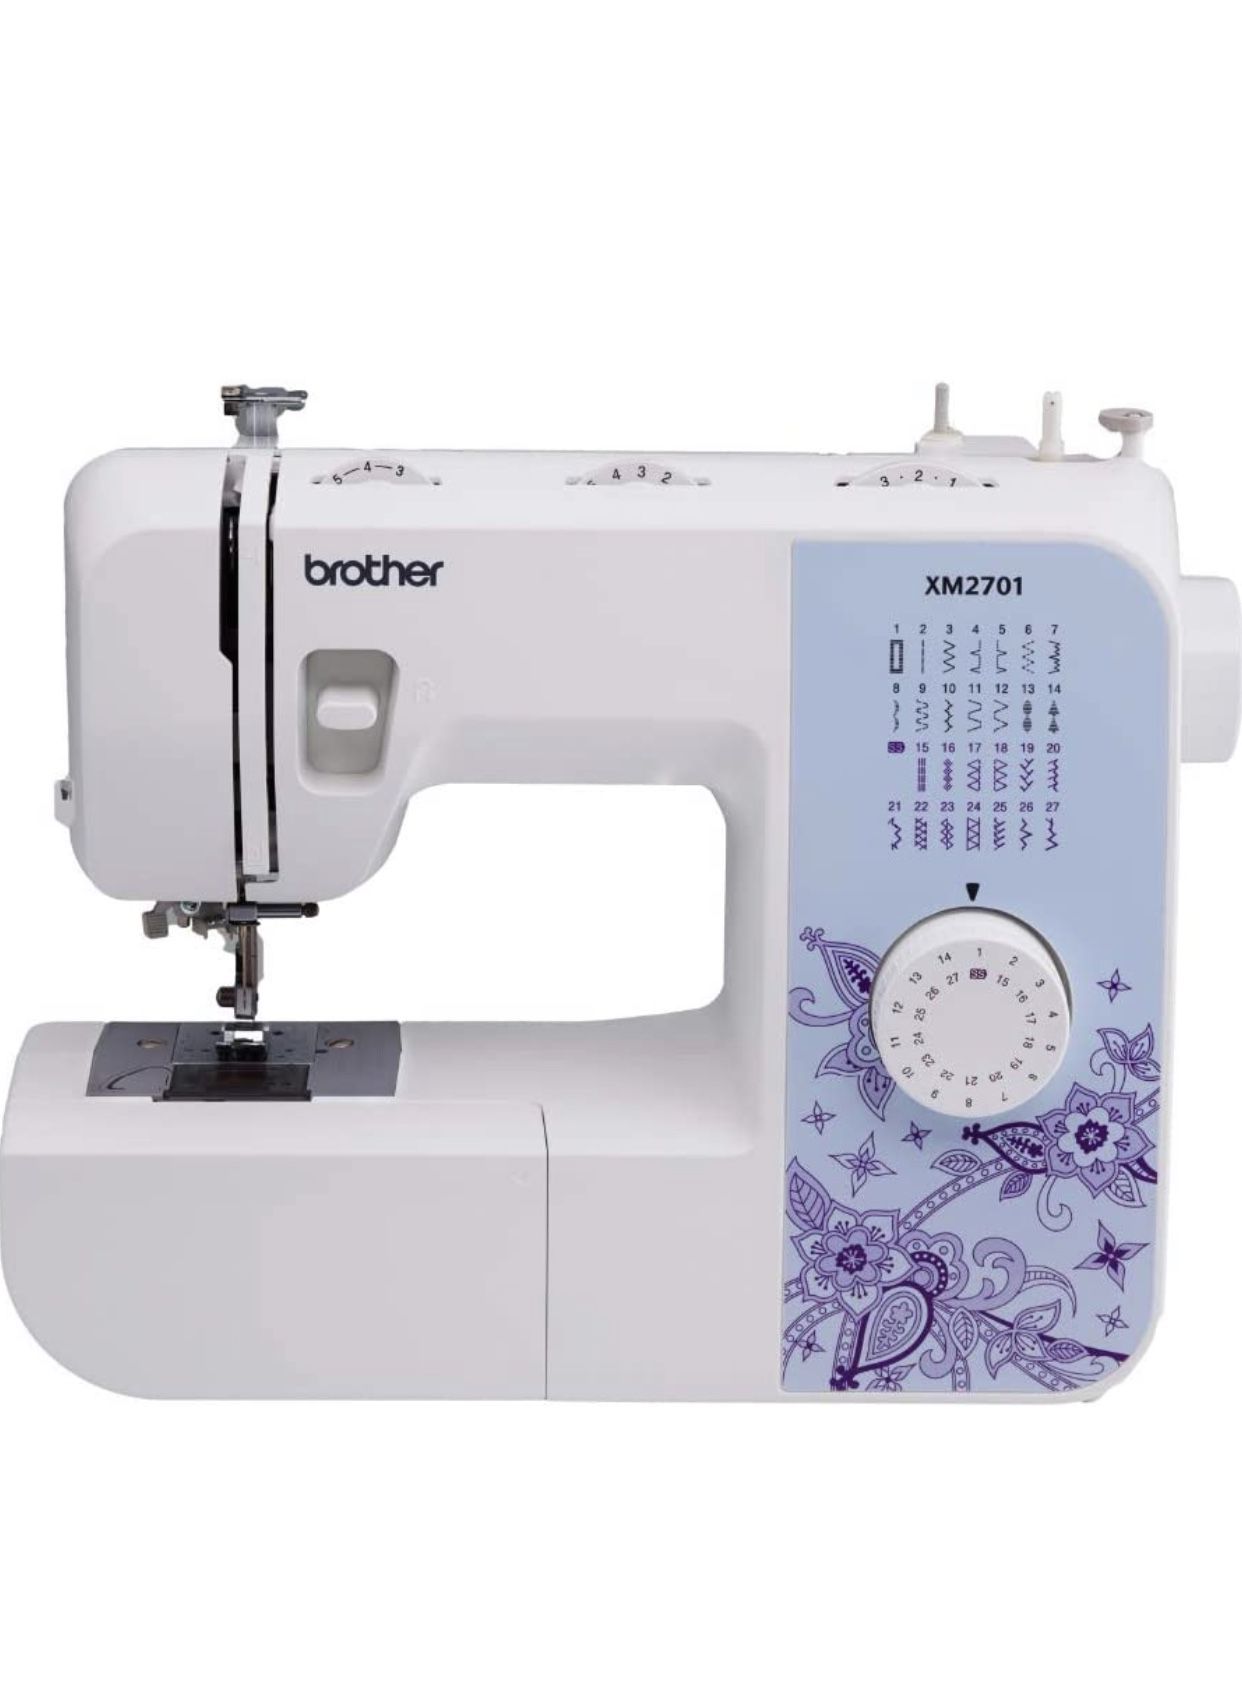 Brand New Brother XM2701 Sewing Machine